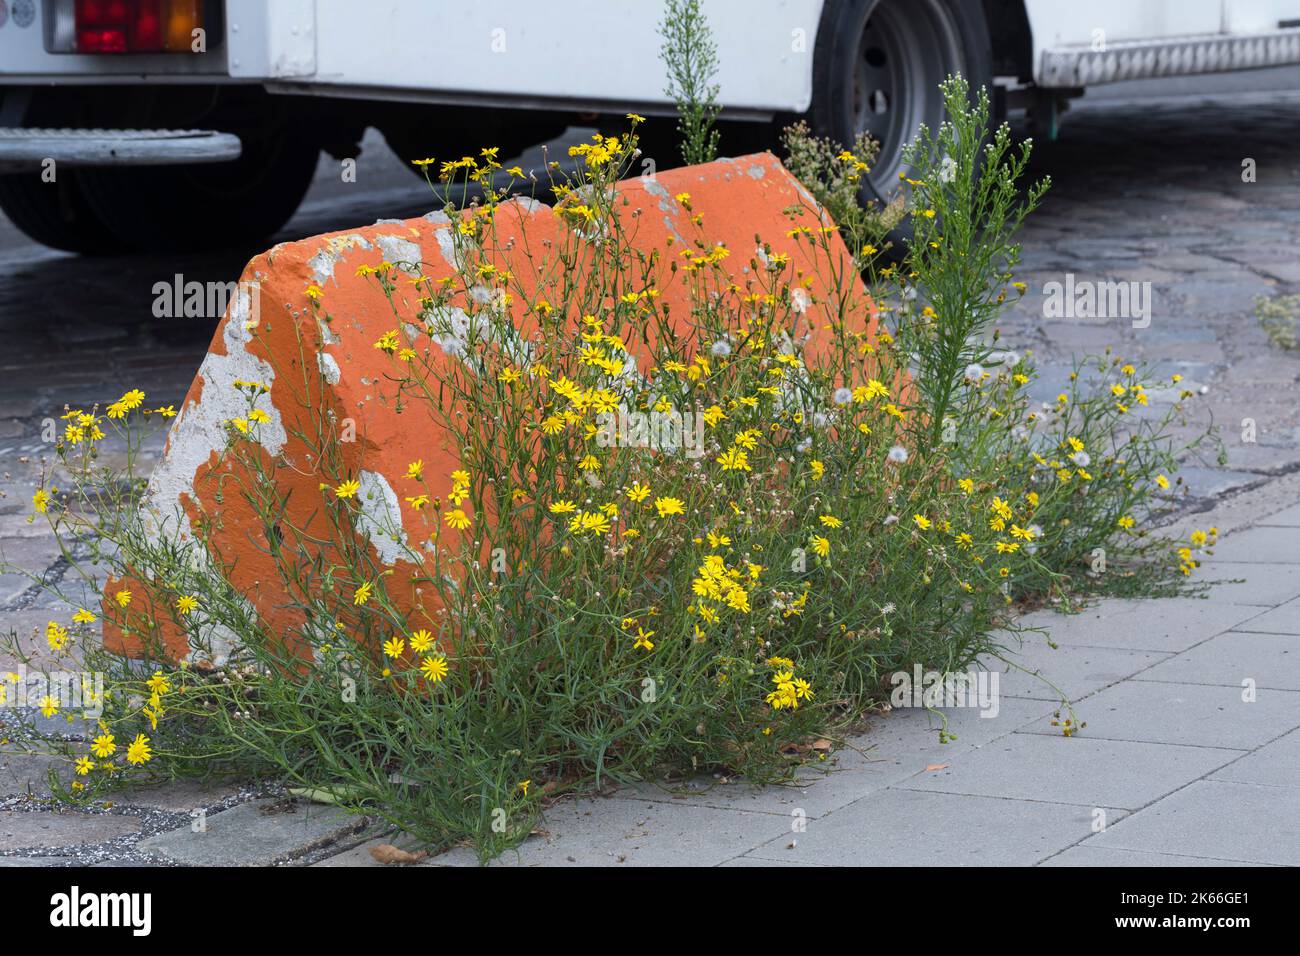 Narrow-Leaved Ragwort (Senecio inaequidens), grows in pavement gaps, Germany Stock Photo